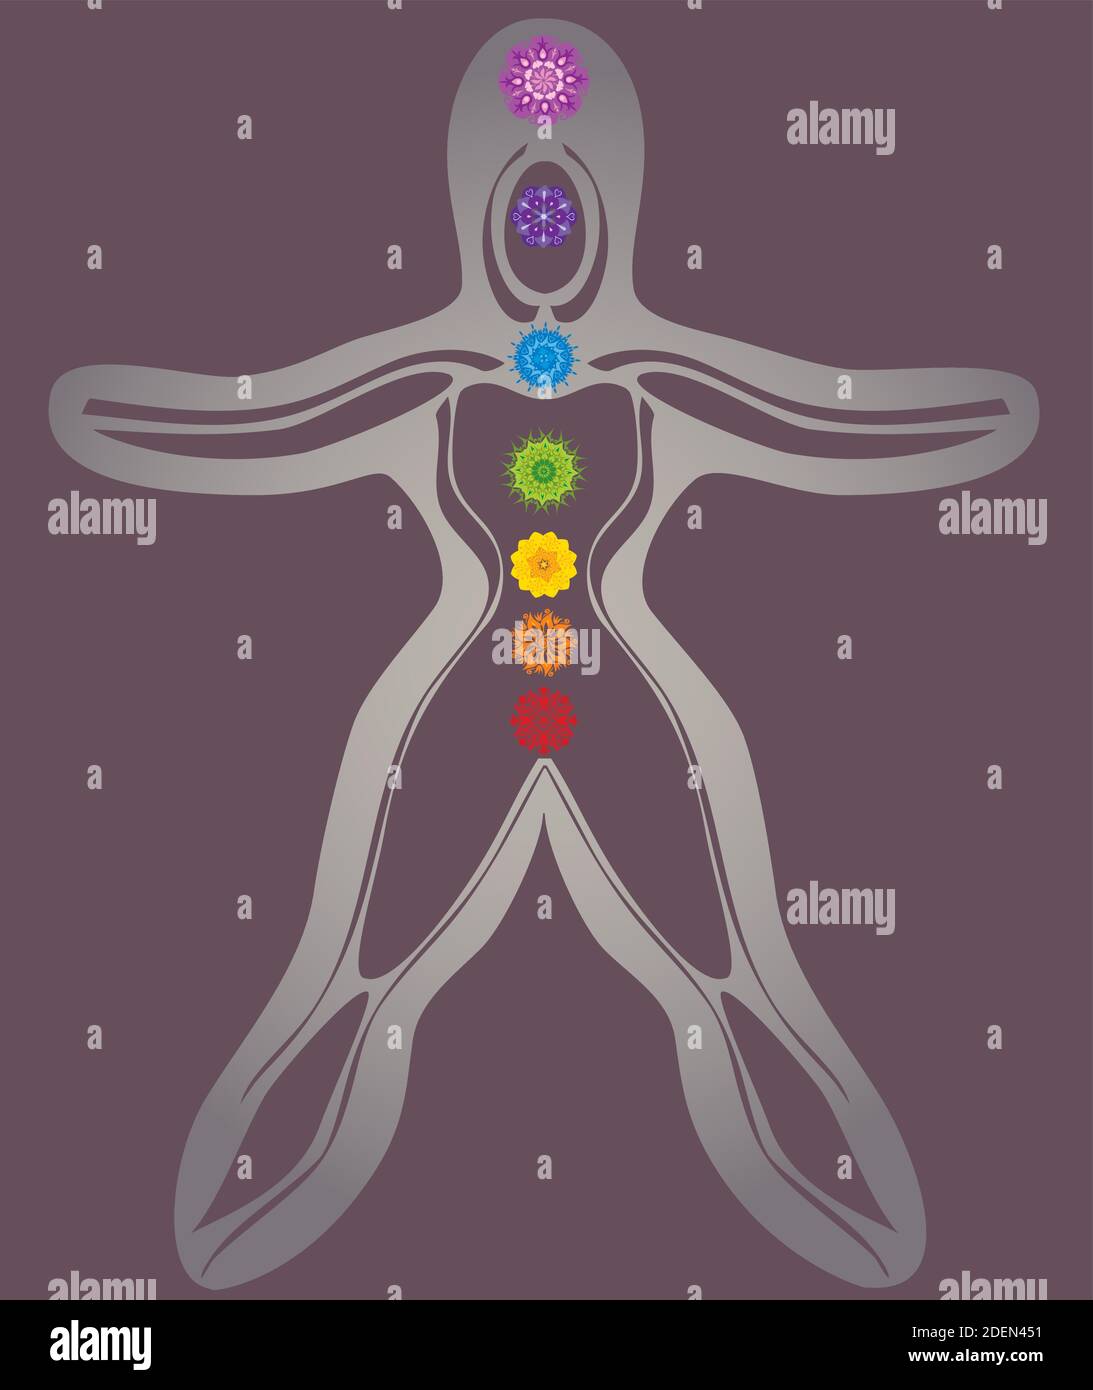 7 Körper Chakras mit Mandalas auf dunklem Hintergrund - Regenbogen Farben Stock Vektor